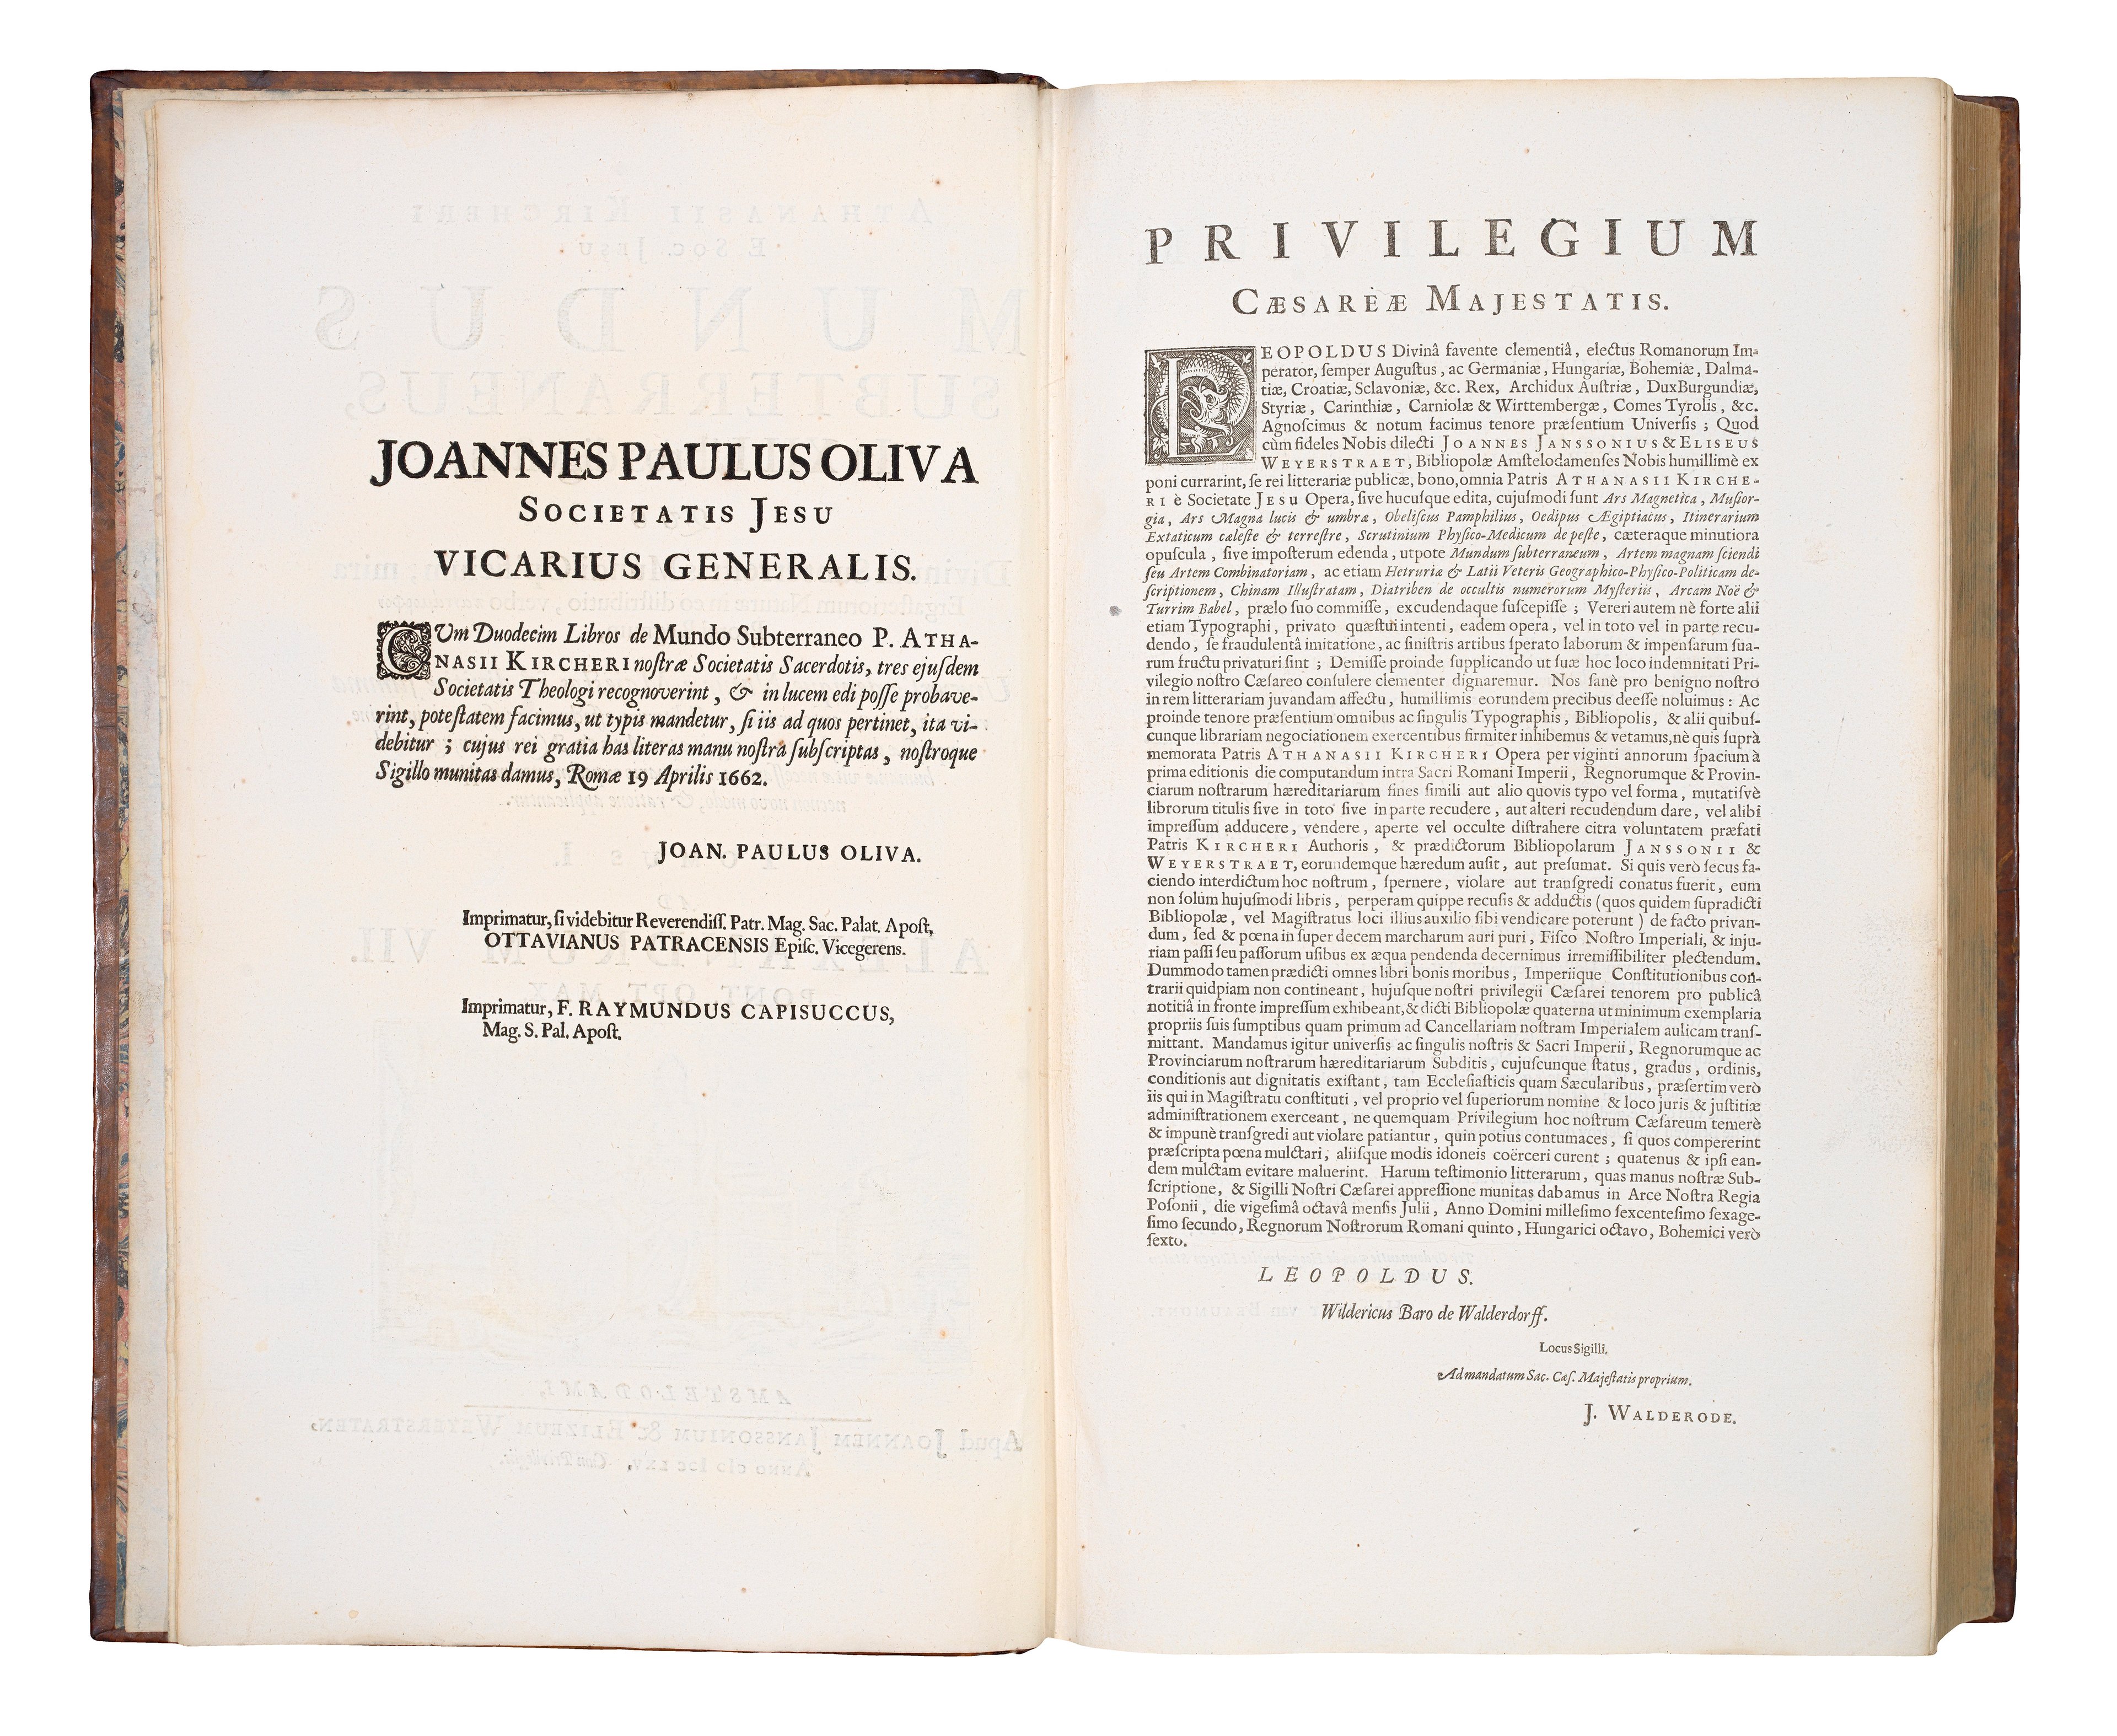 Printing privilege from Athanasius Kircher's Mundus Subterraneus, 1662